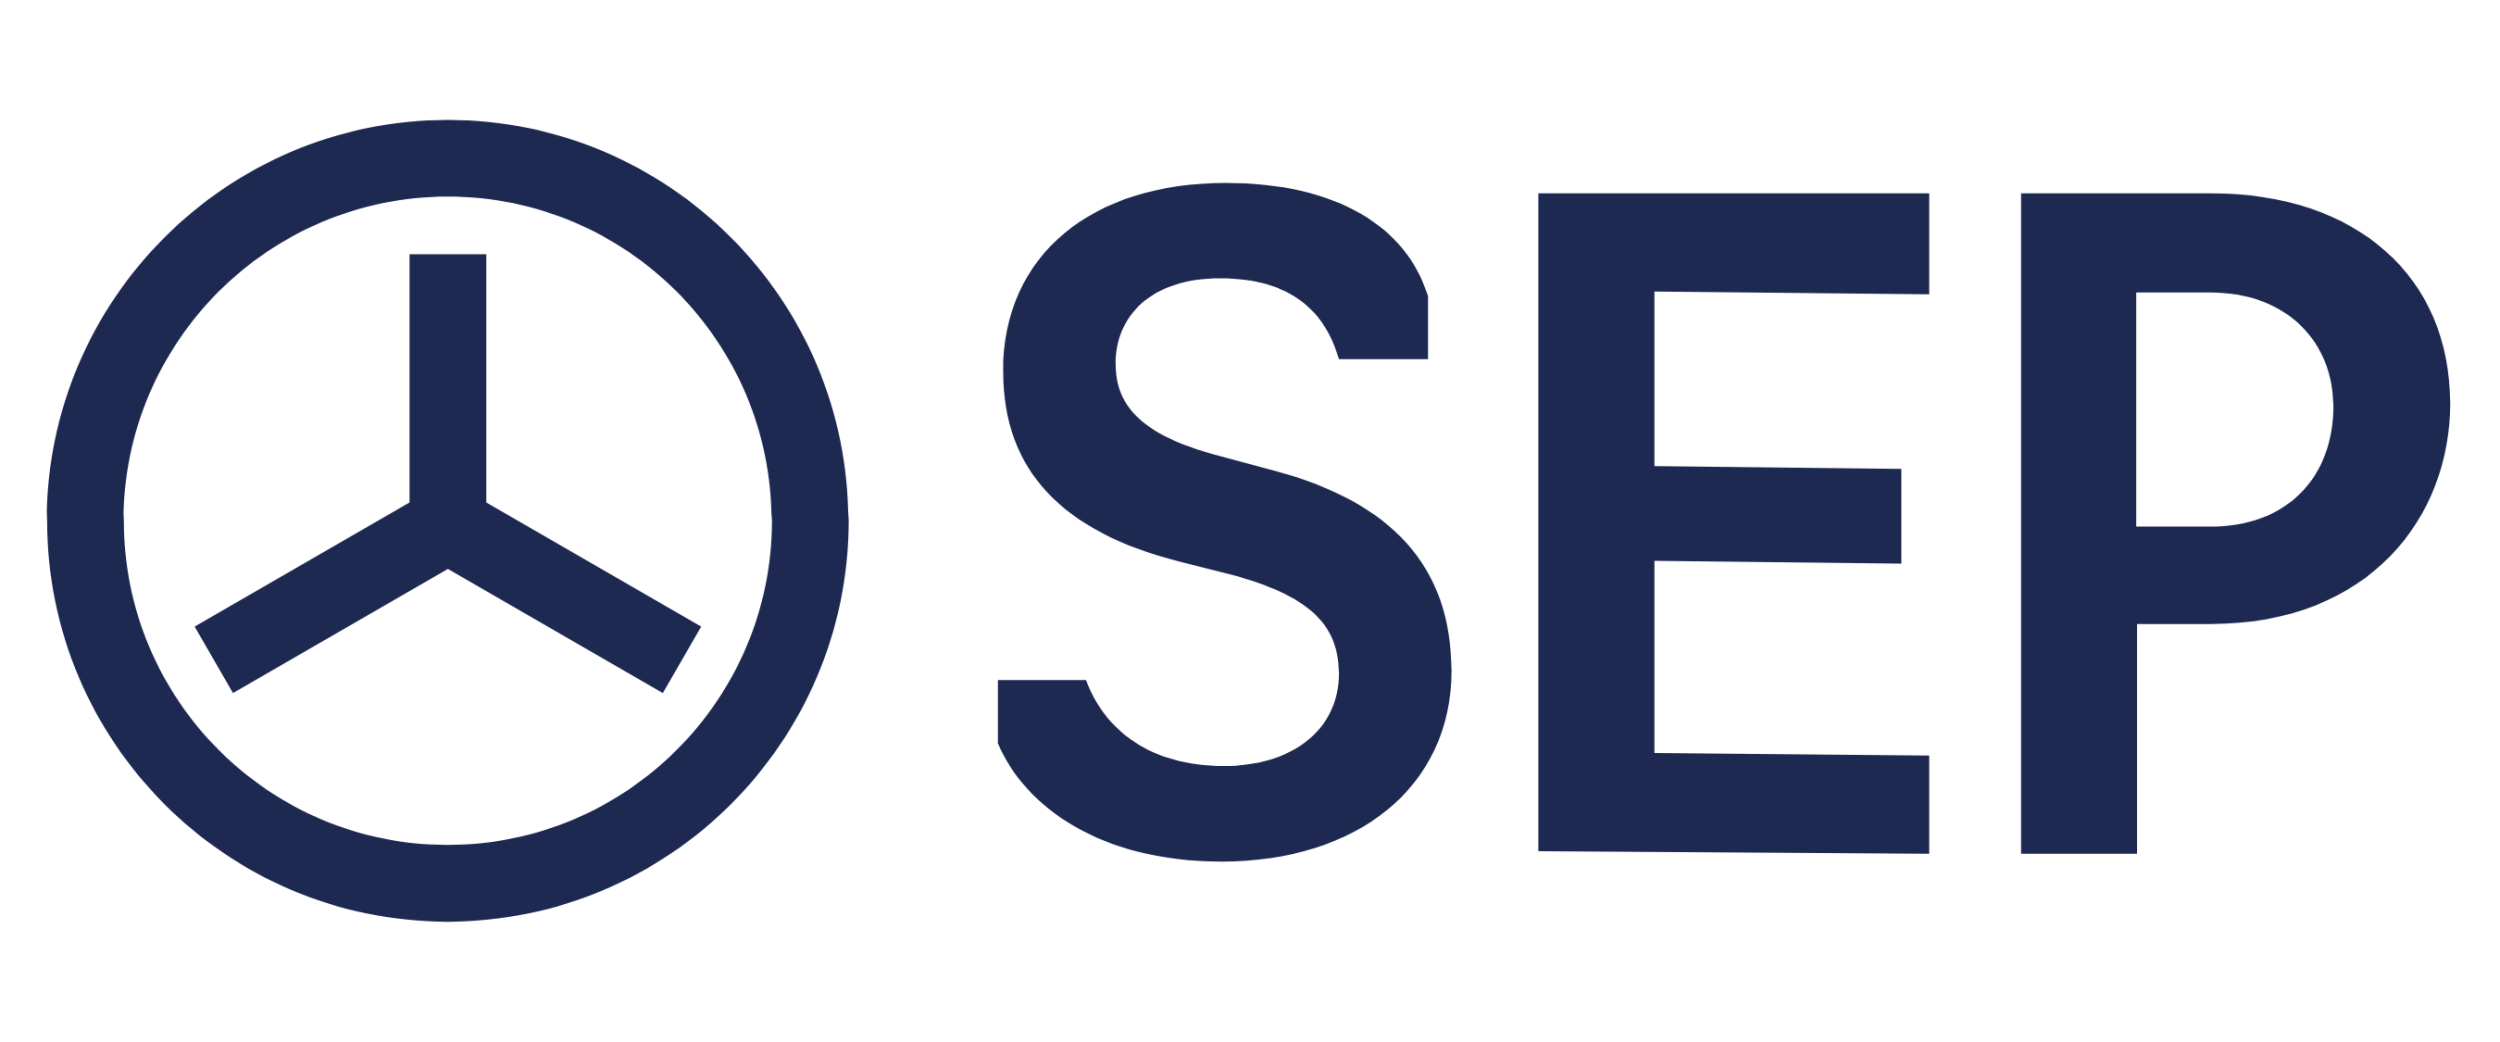 logo navy blue